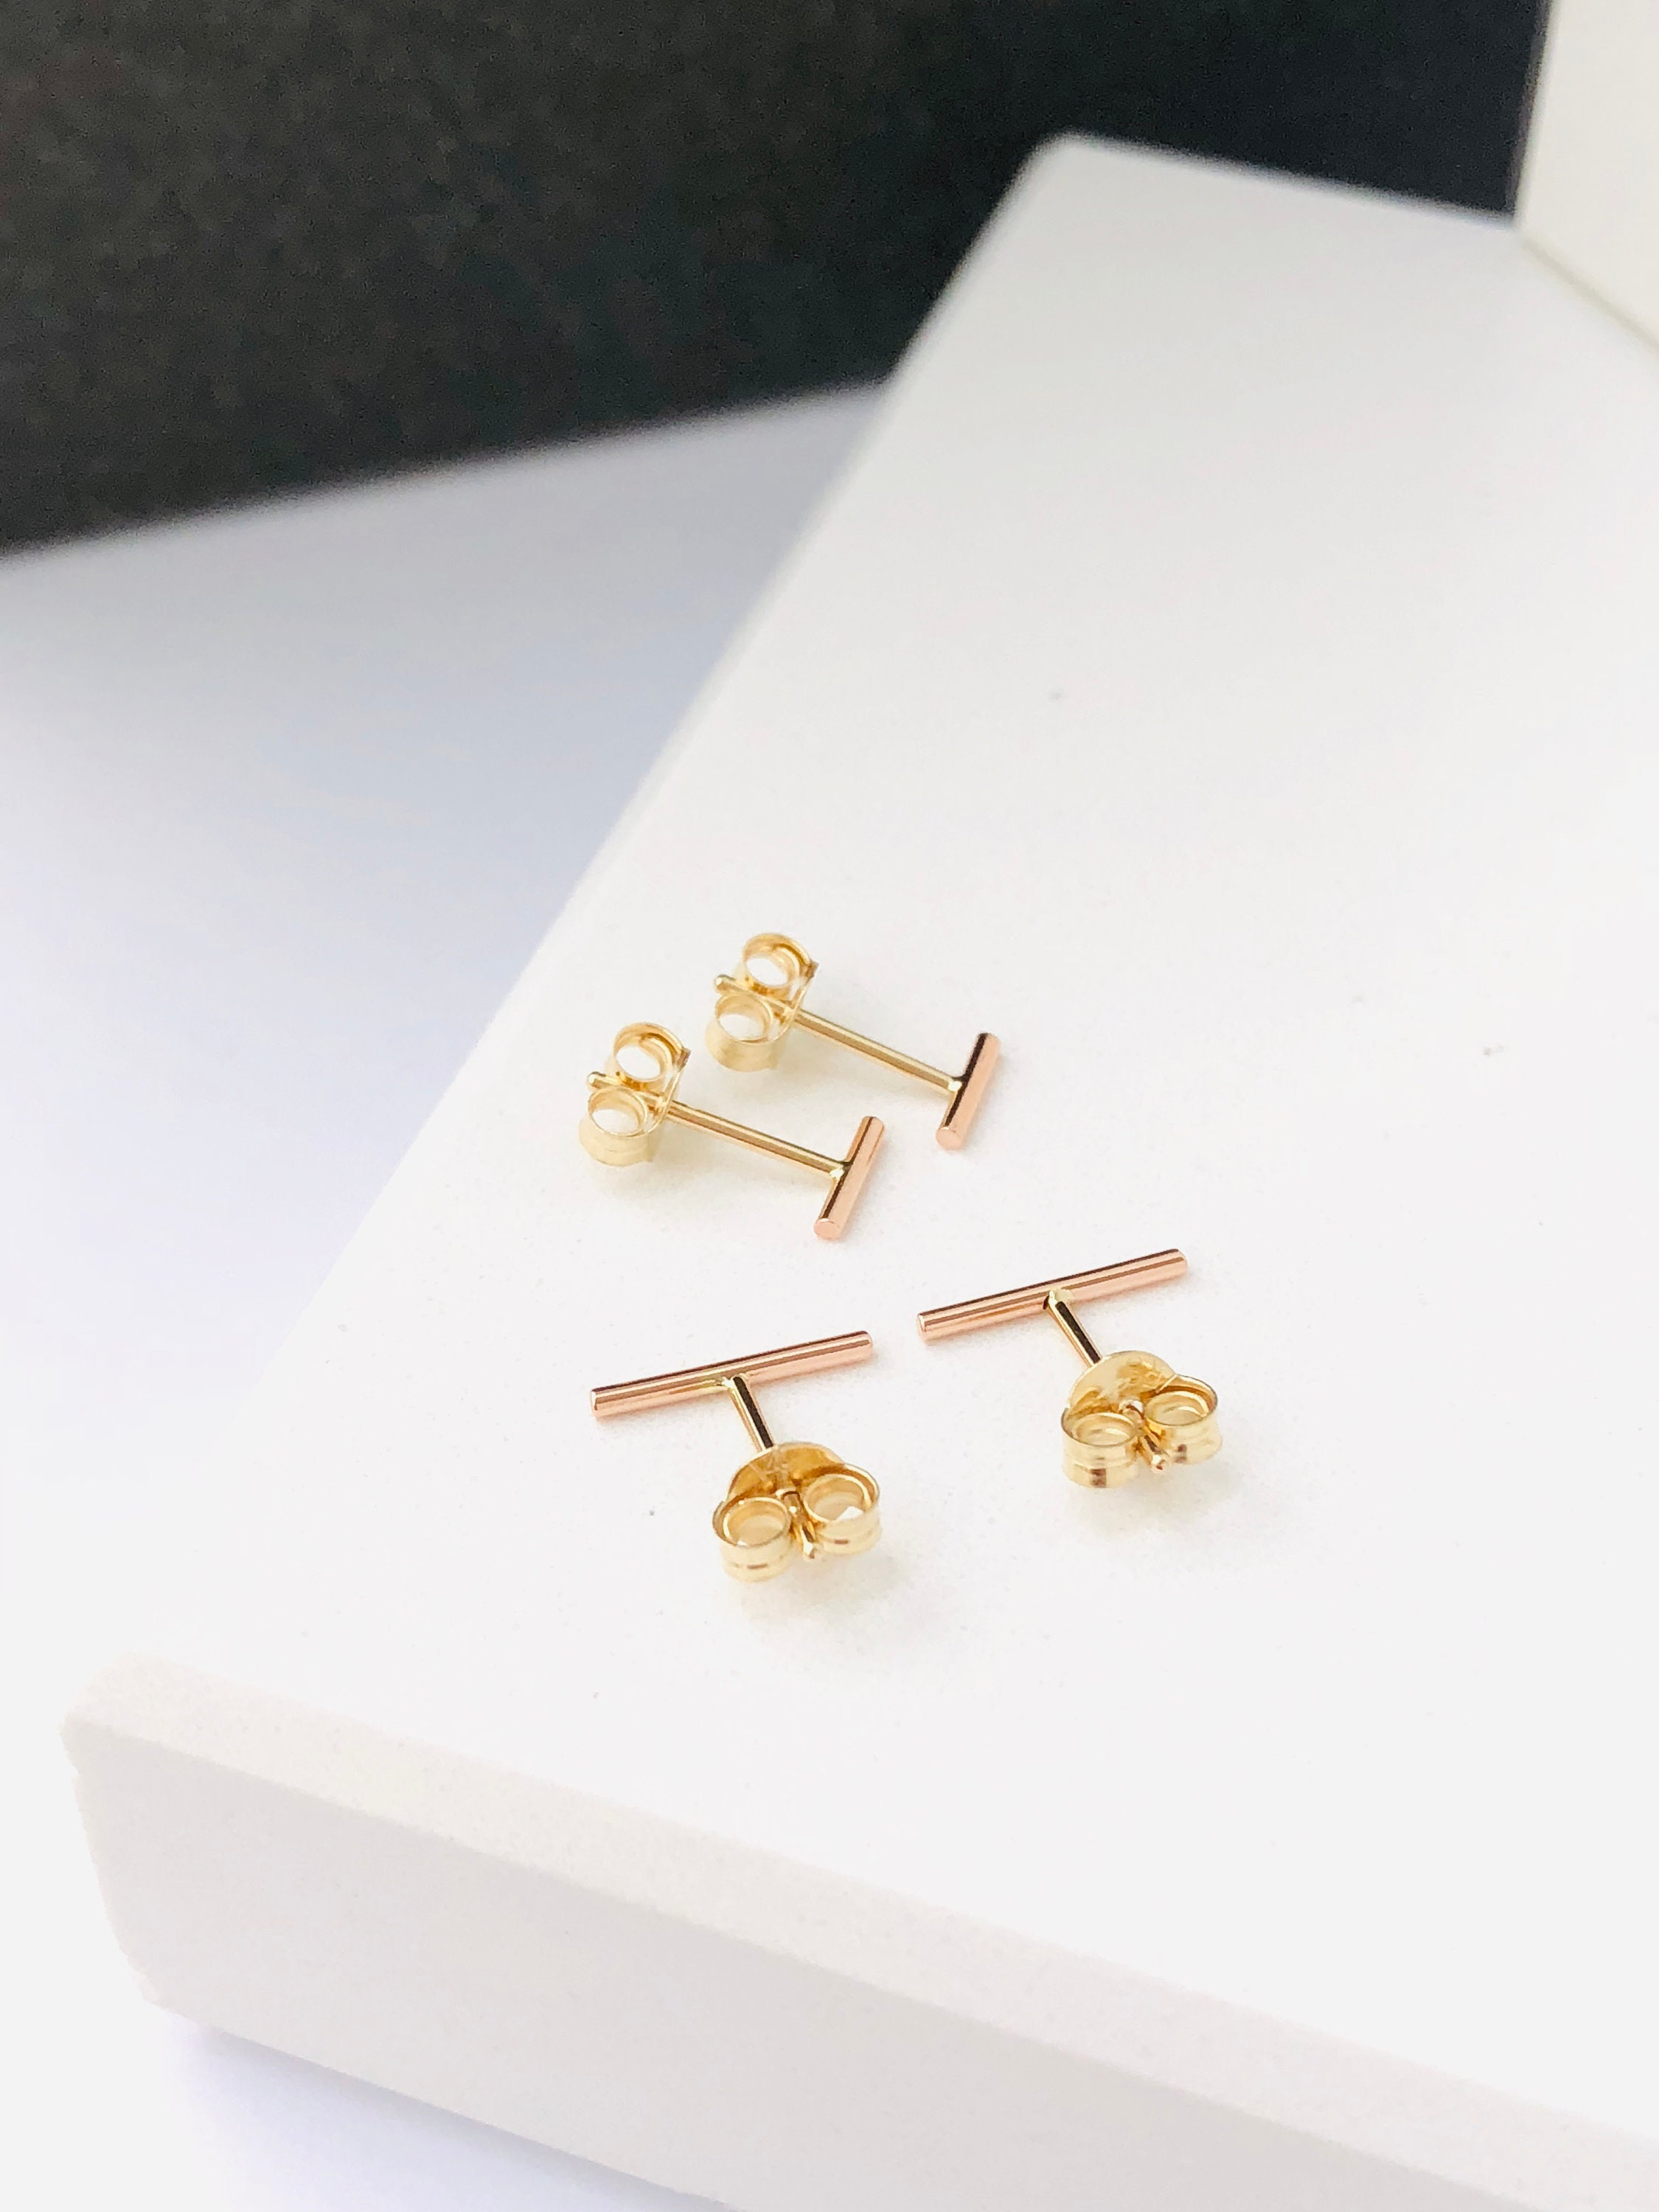 Gold line earrings solid gold stud earrings cartilage bar | Etsy